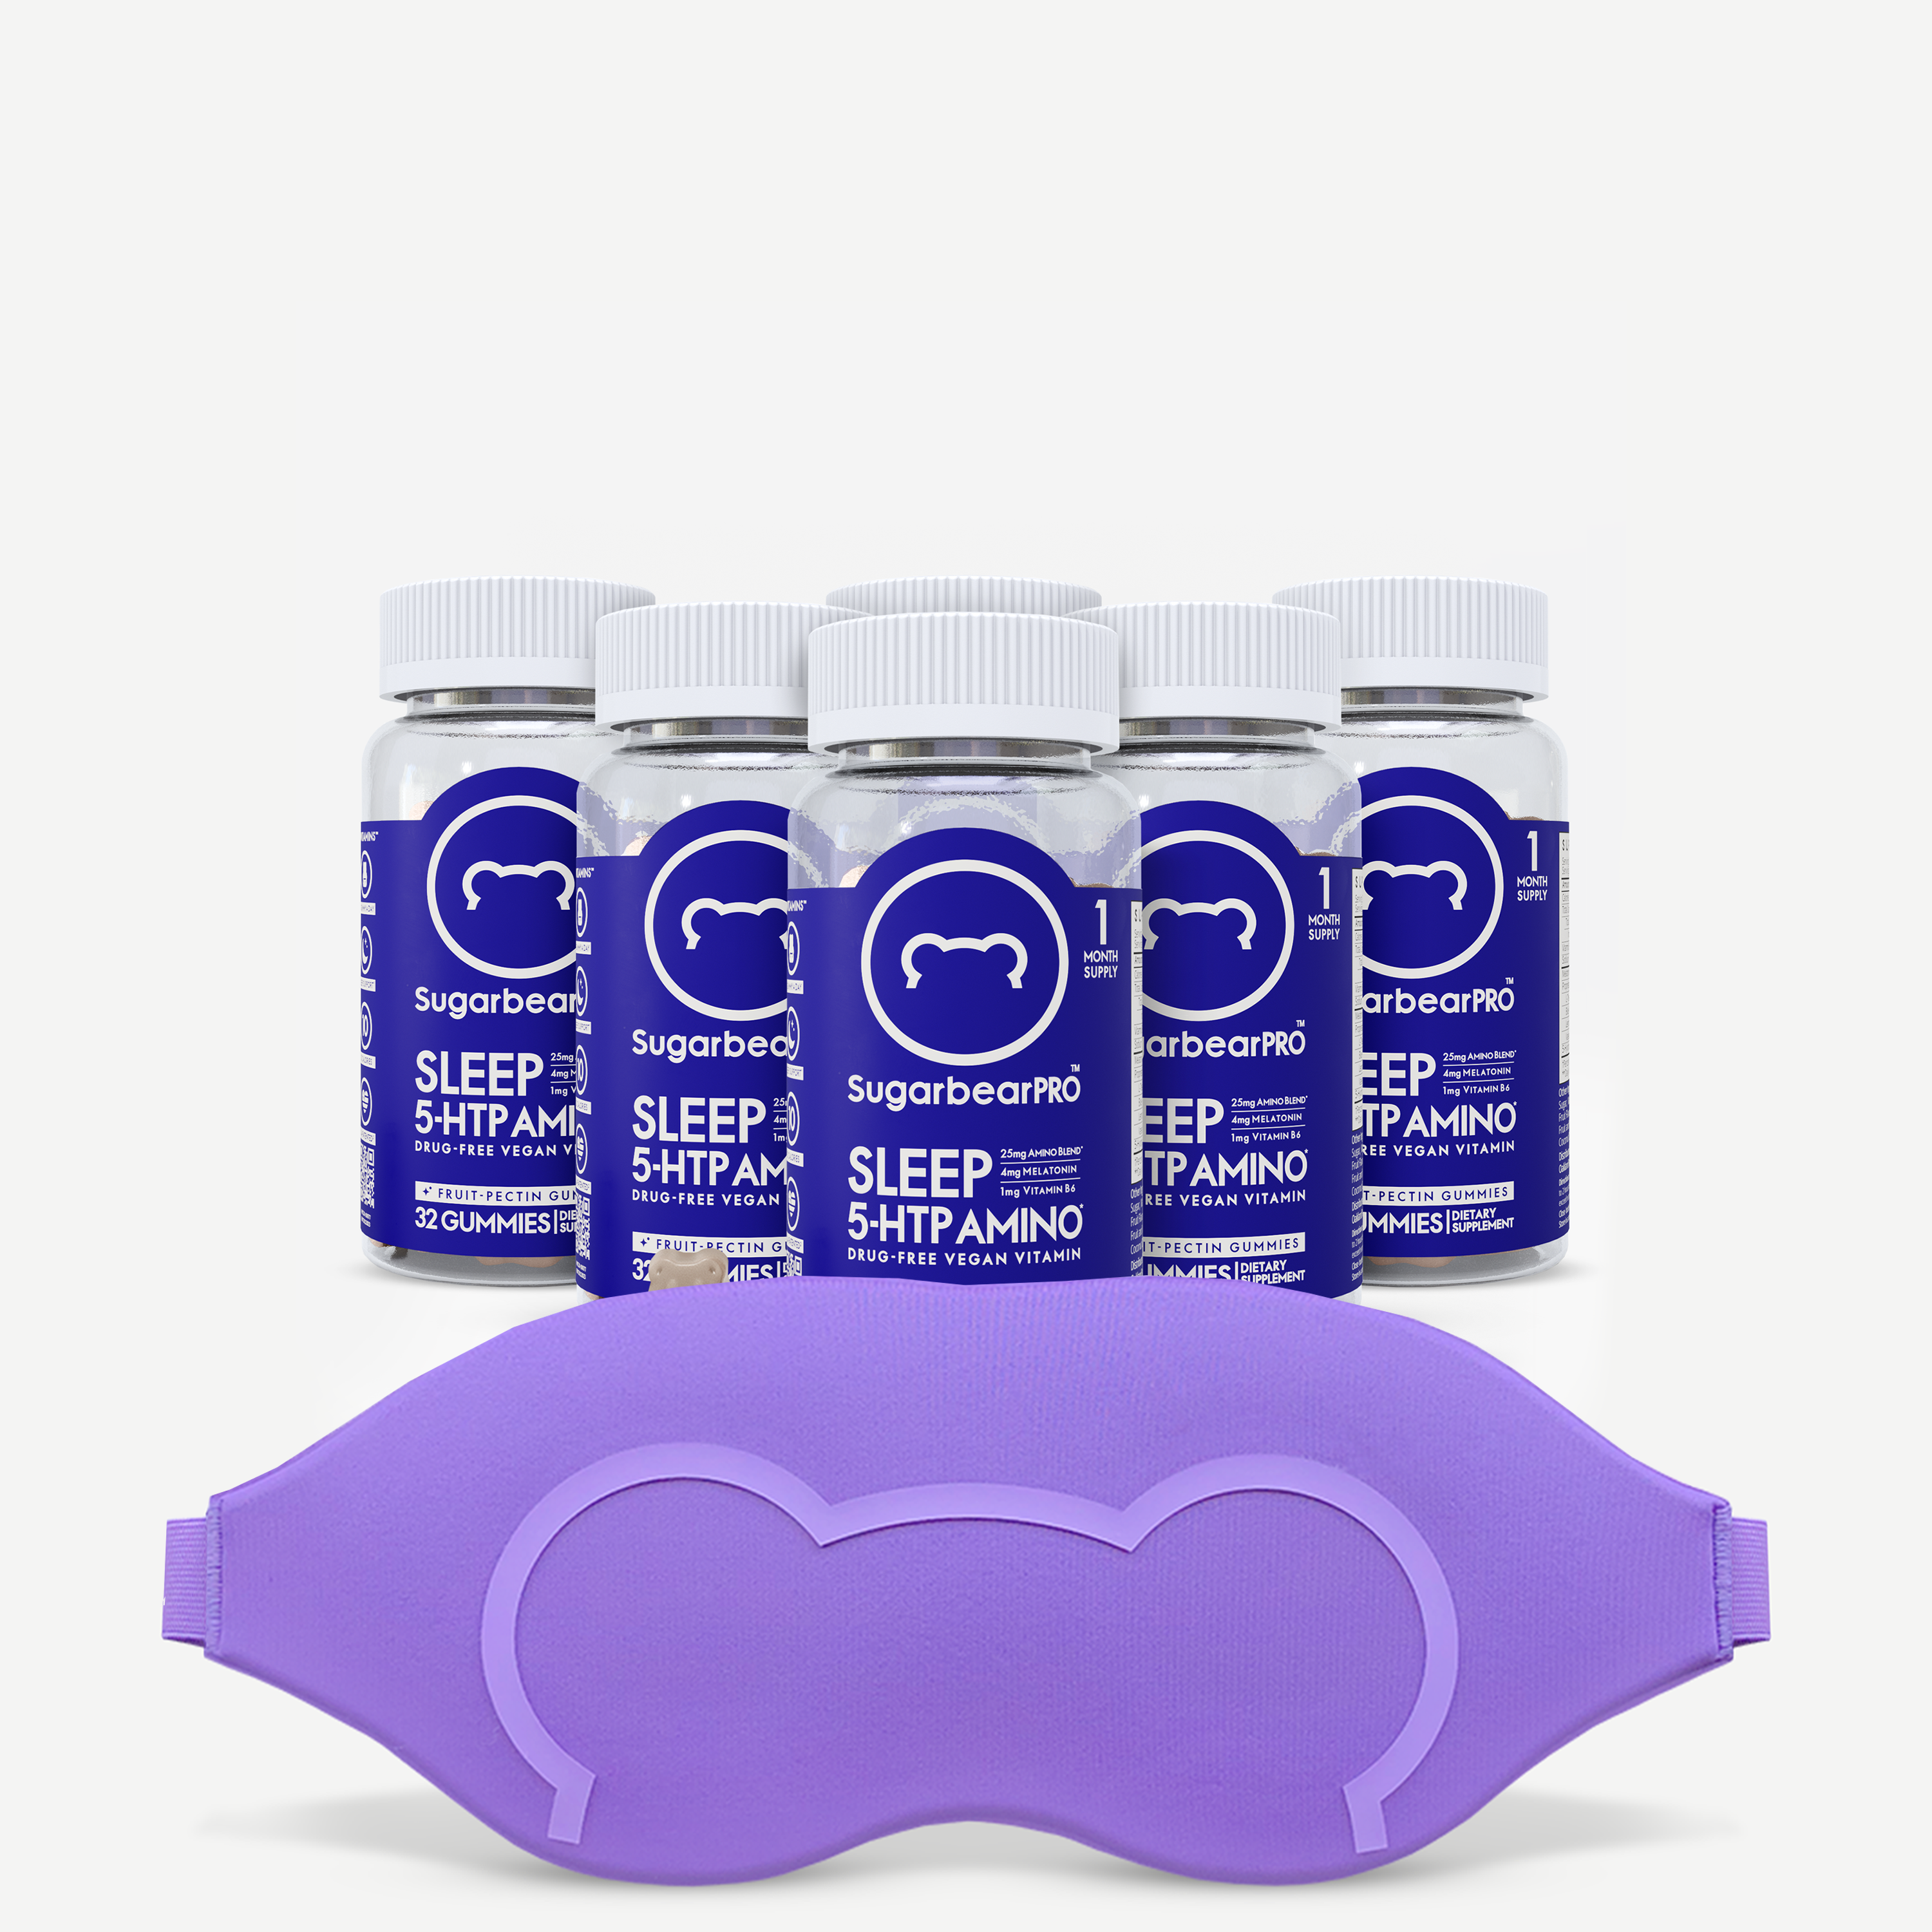 Sugarbear Sleep 5-HTP Amino Vitamin - 6 Month + Free Gift